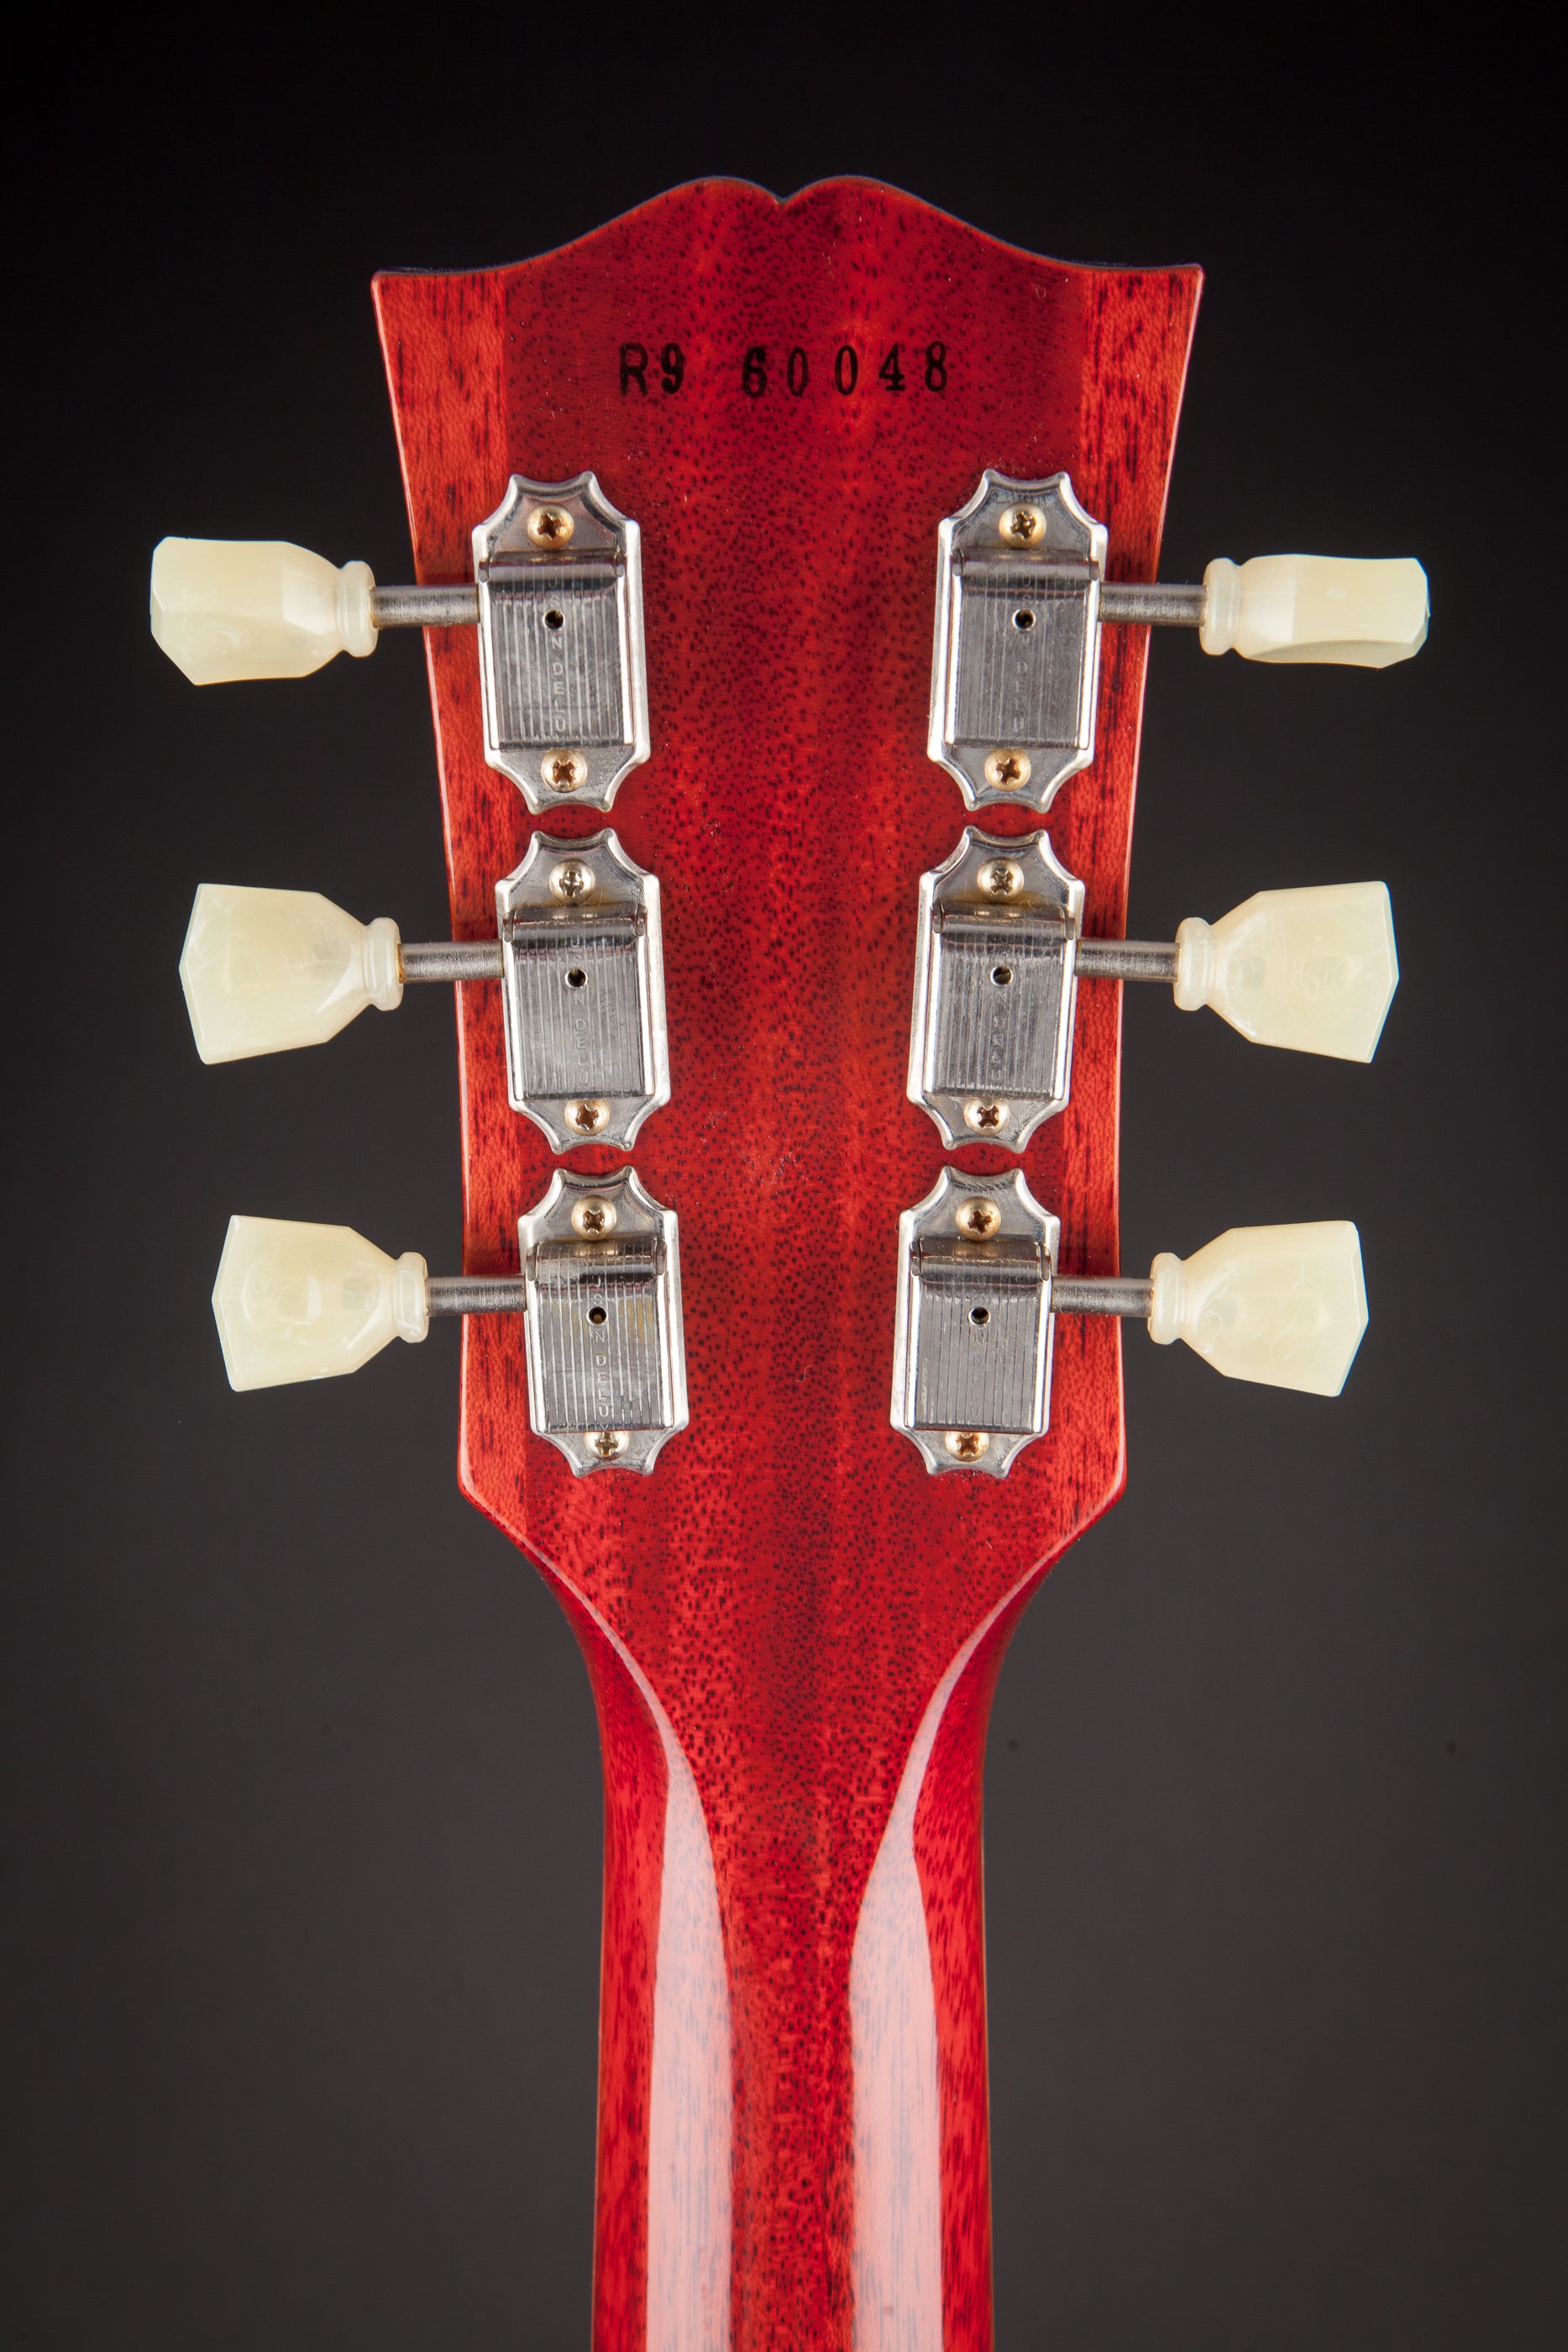 Gibson Custom Shop: Standard Historic VOS 59 Les Paul Bourbon Burst #R960048